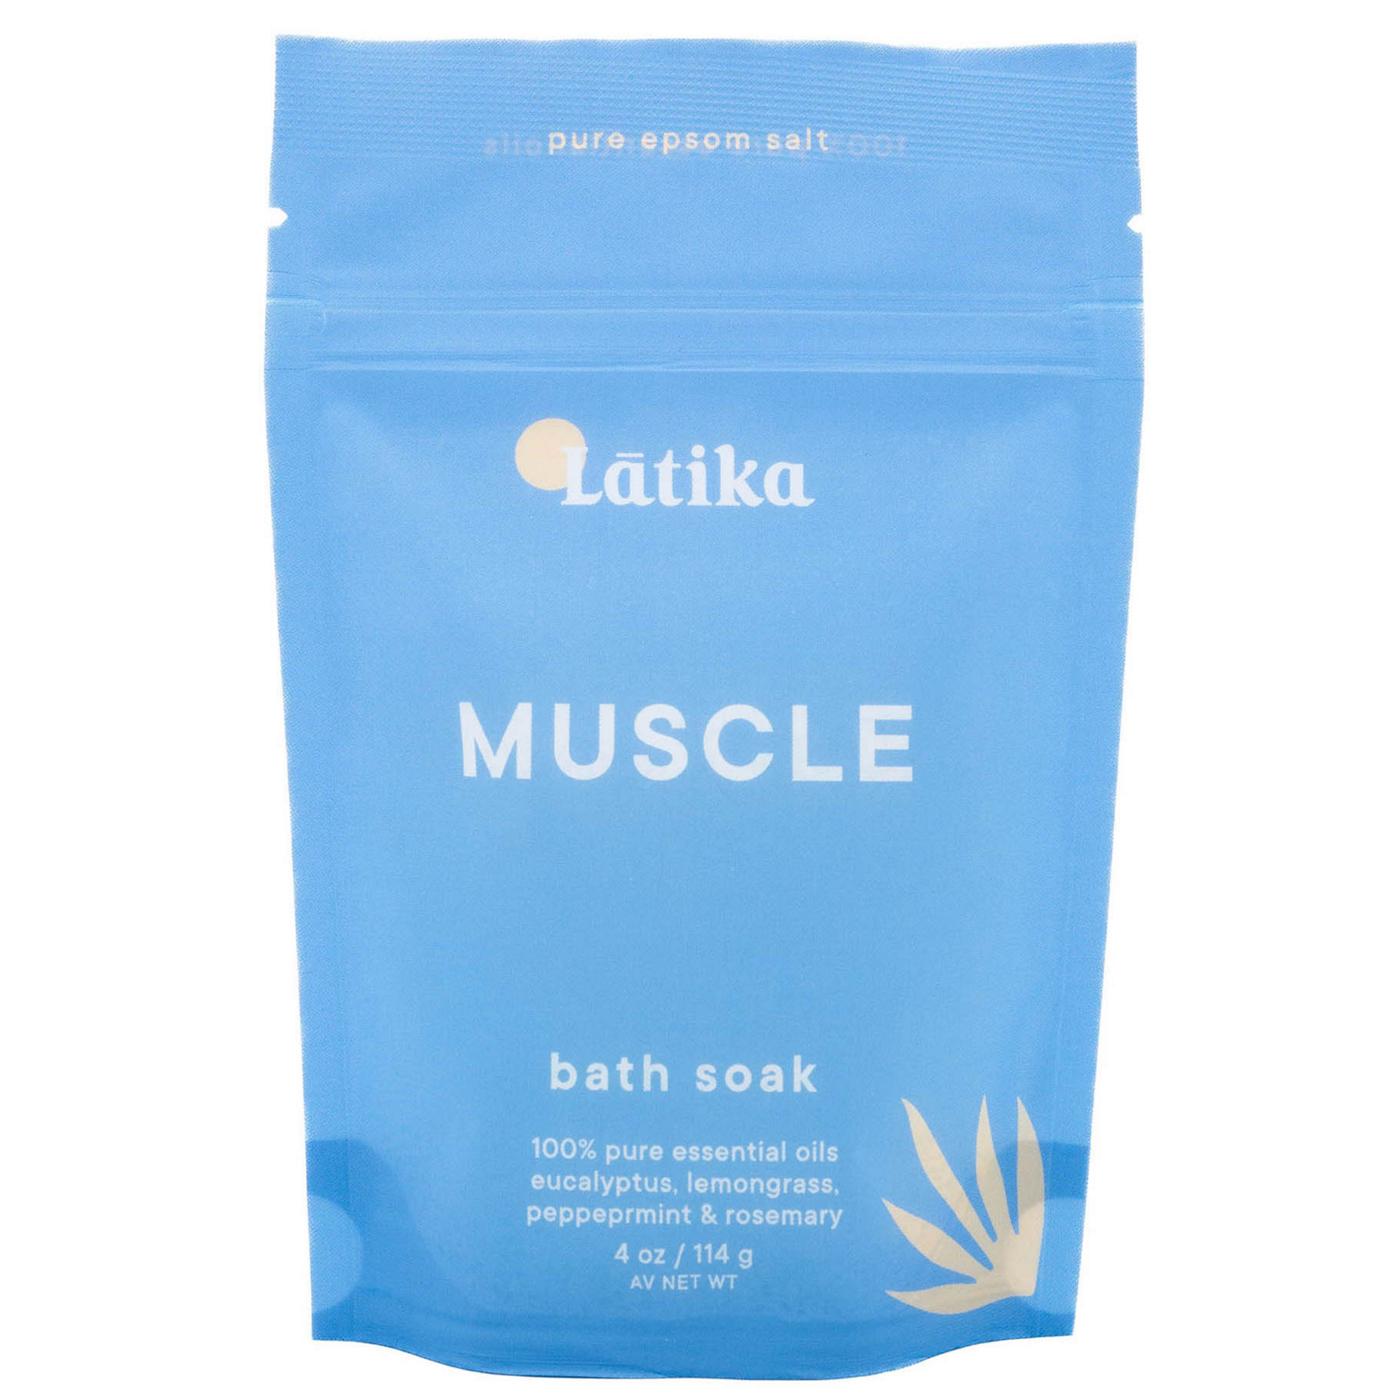 Latika Body Essentials Muscle Salt Bath Soak with Pure Essential Oils; image 1 of 2